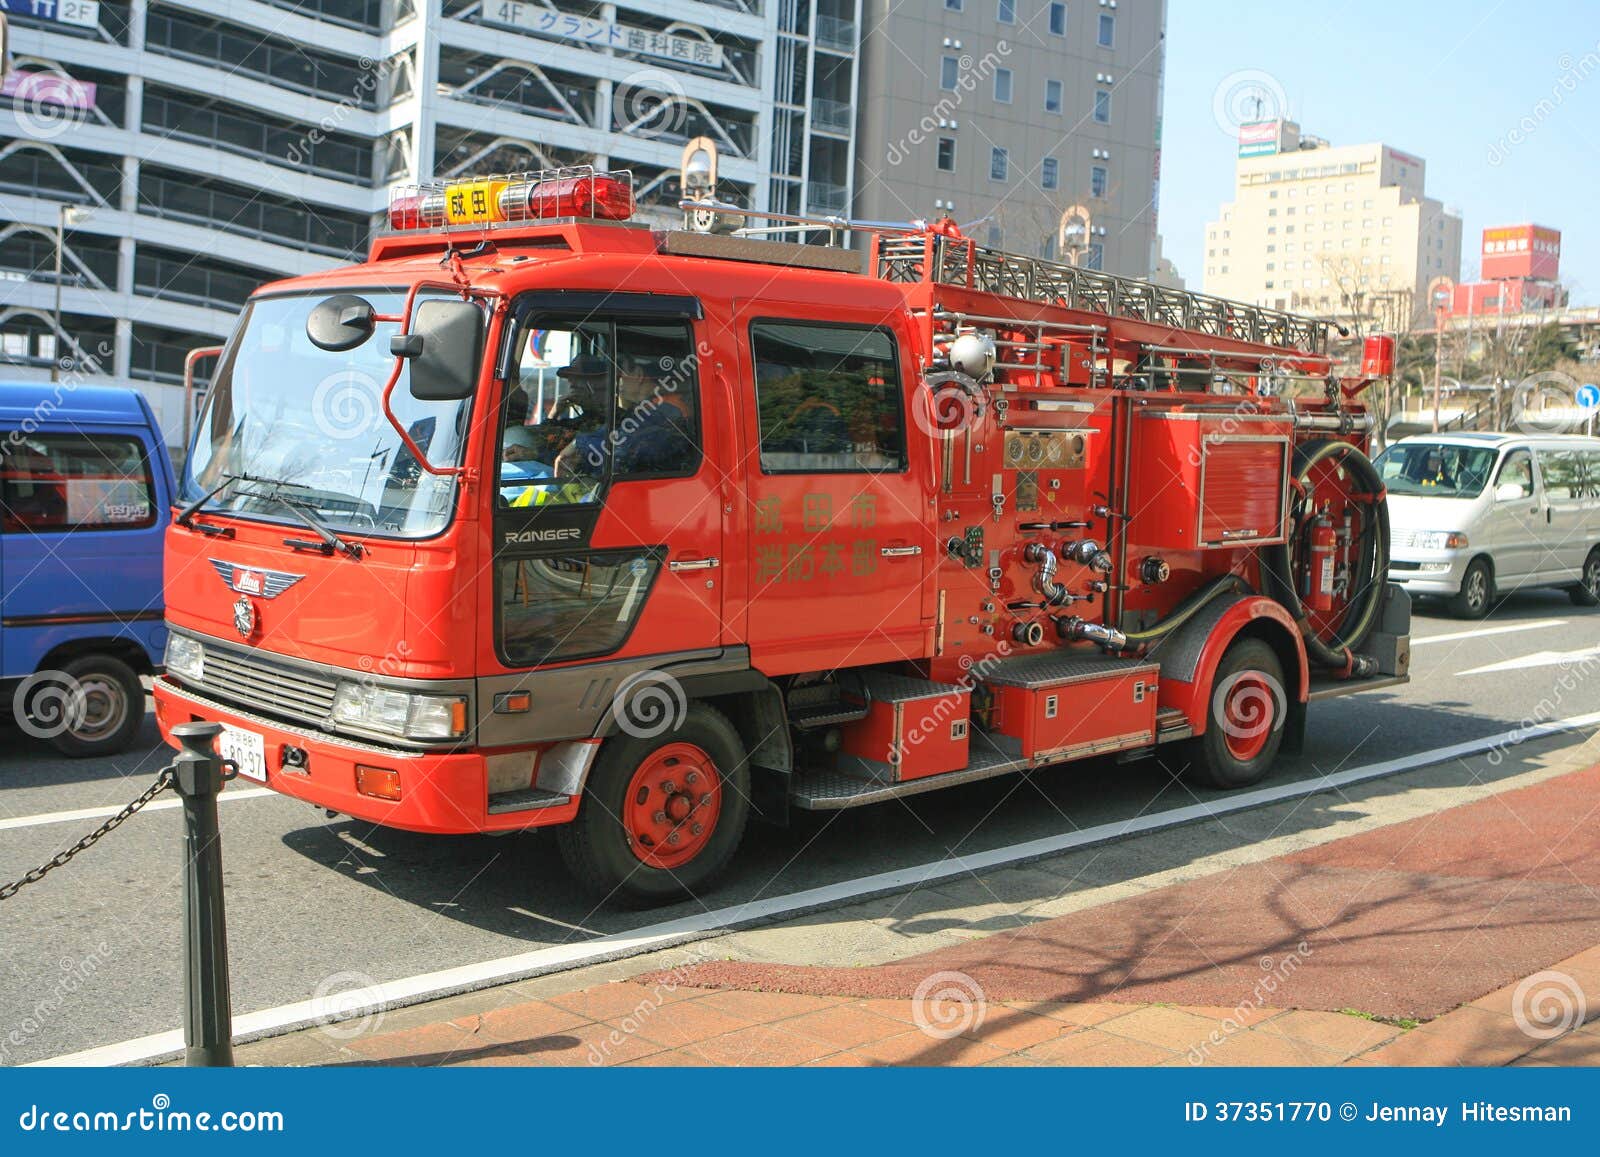 japan fire truck